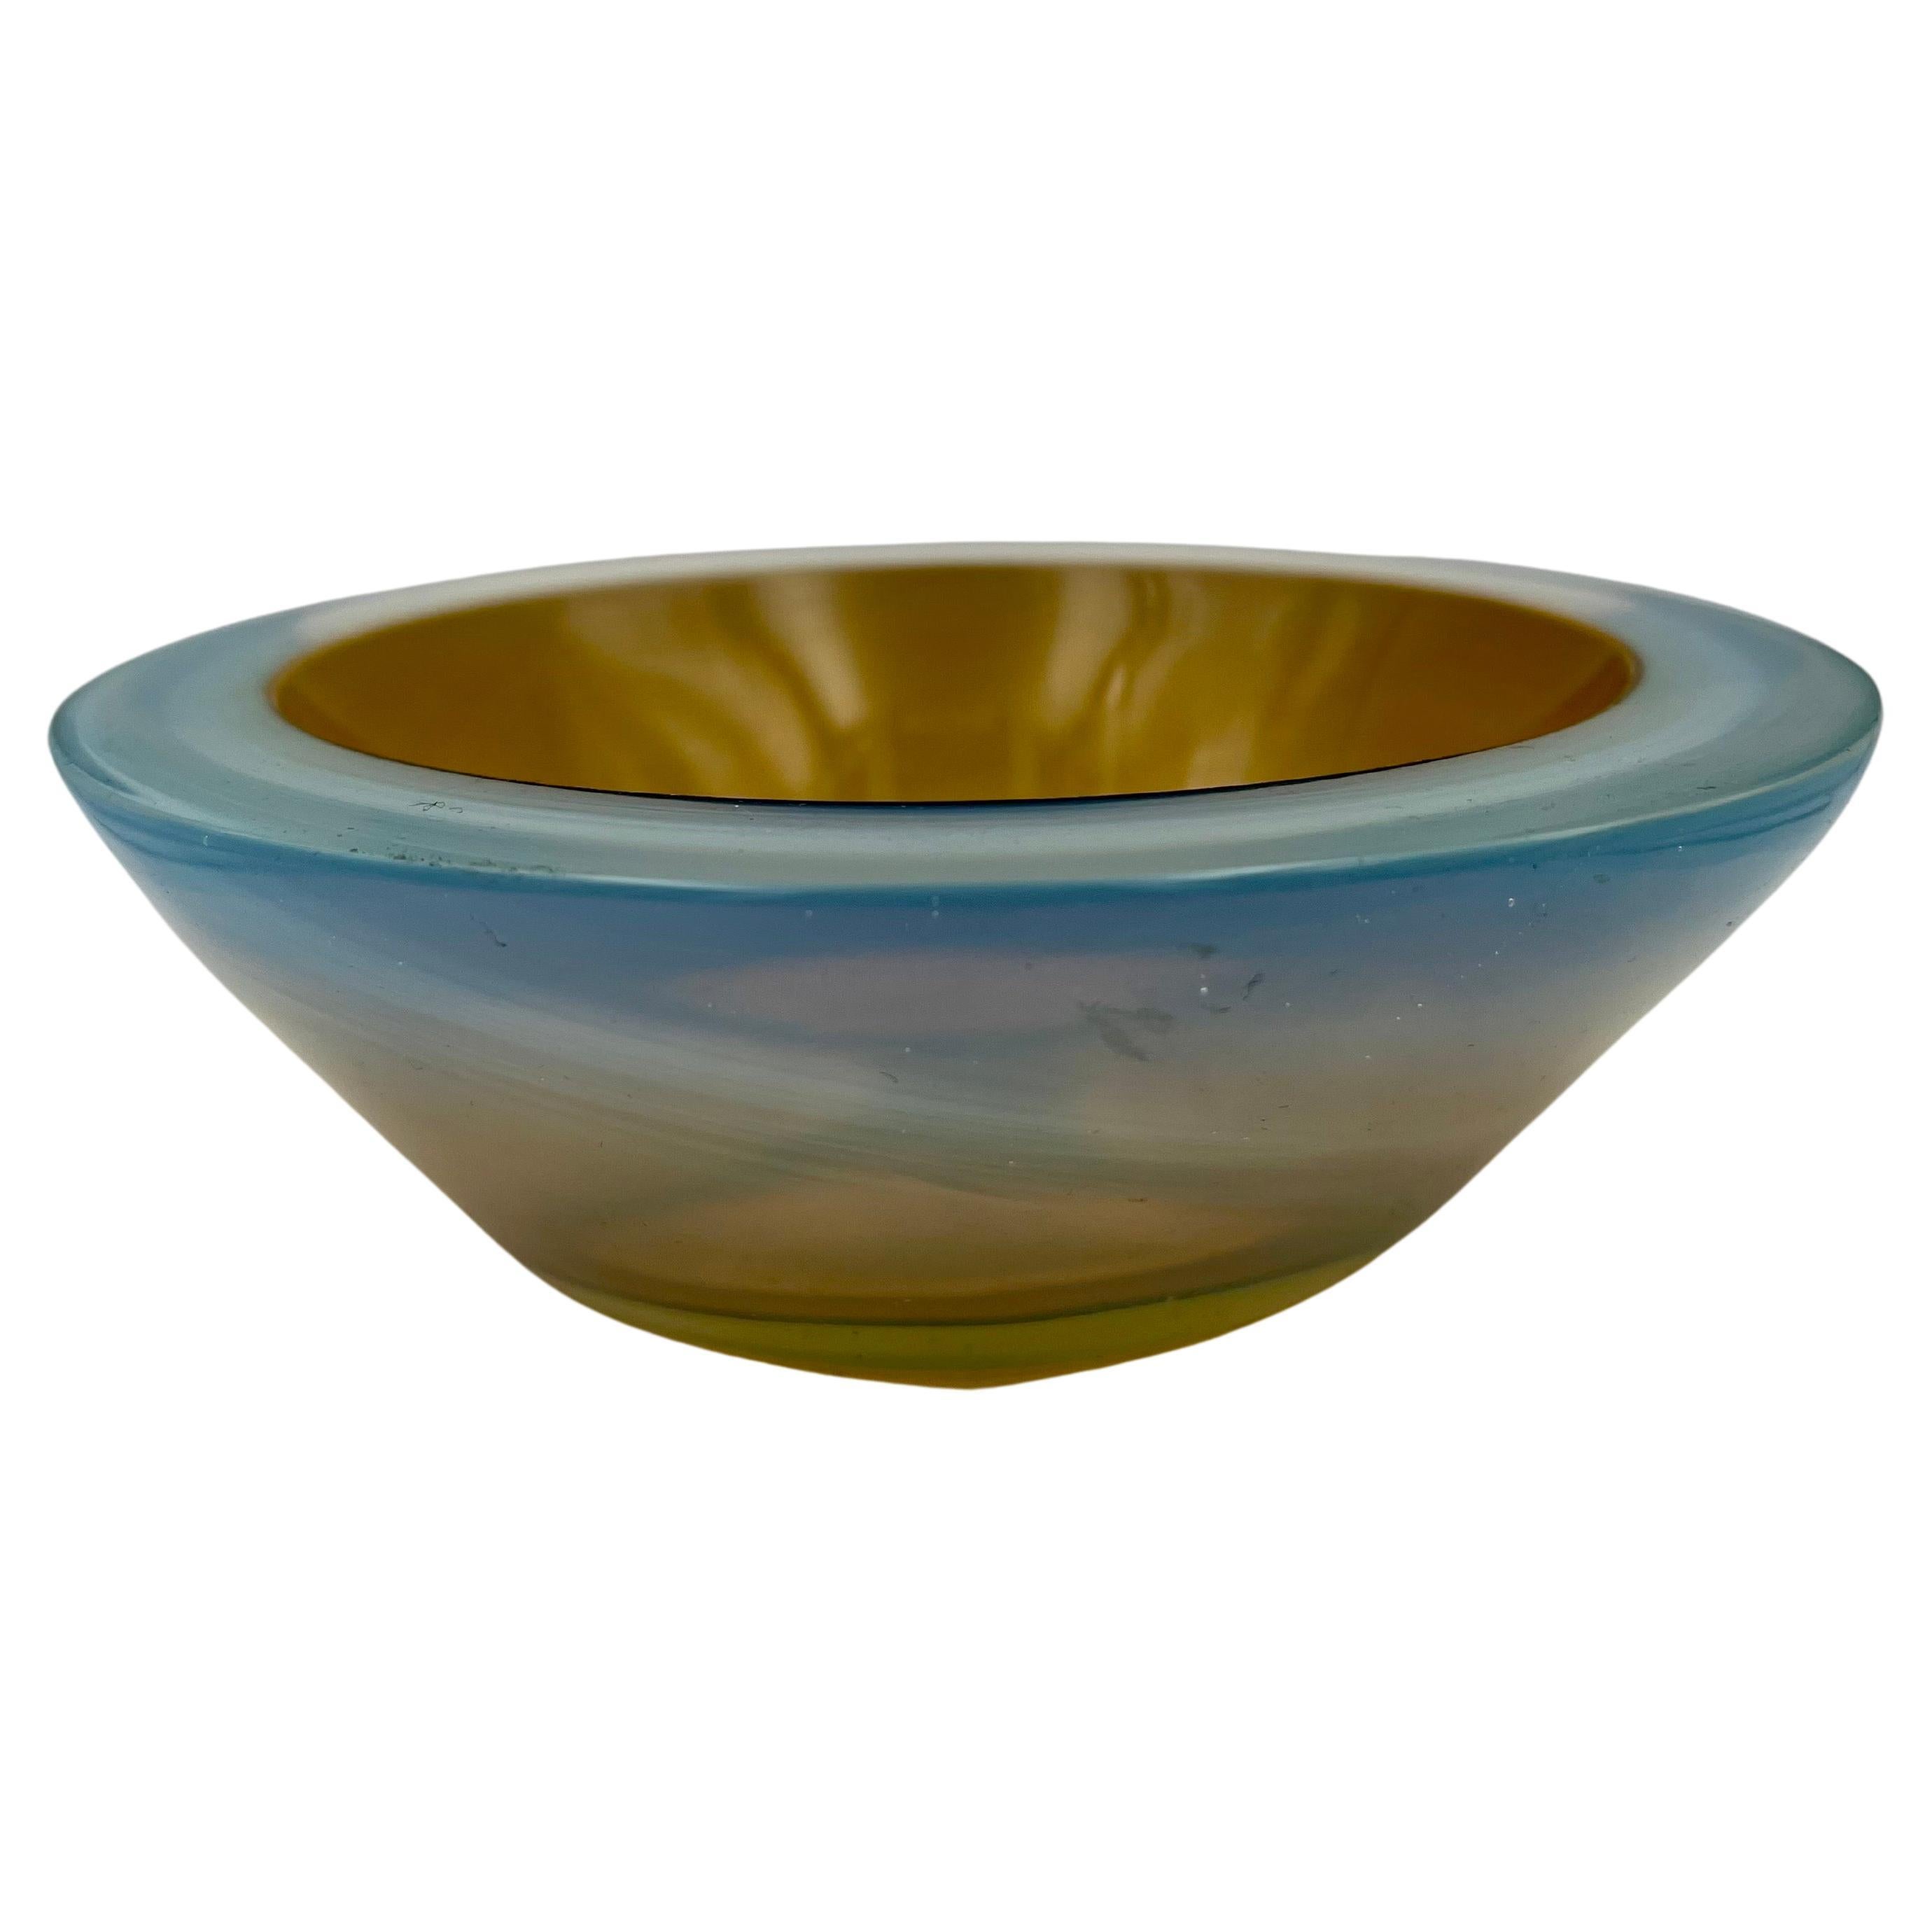 Beautiful rare Scandinavian glass bowl 2 tone color combo, yellow and white, circa 1960's no chips or cracks.